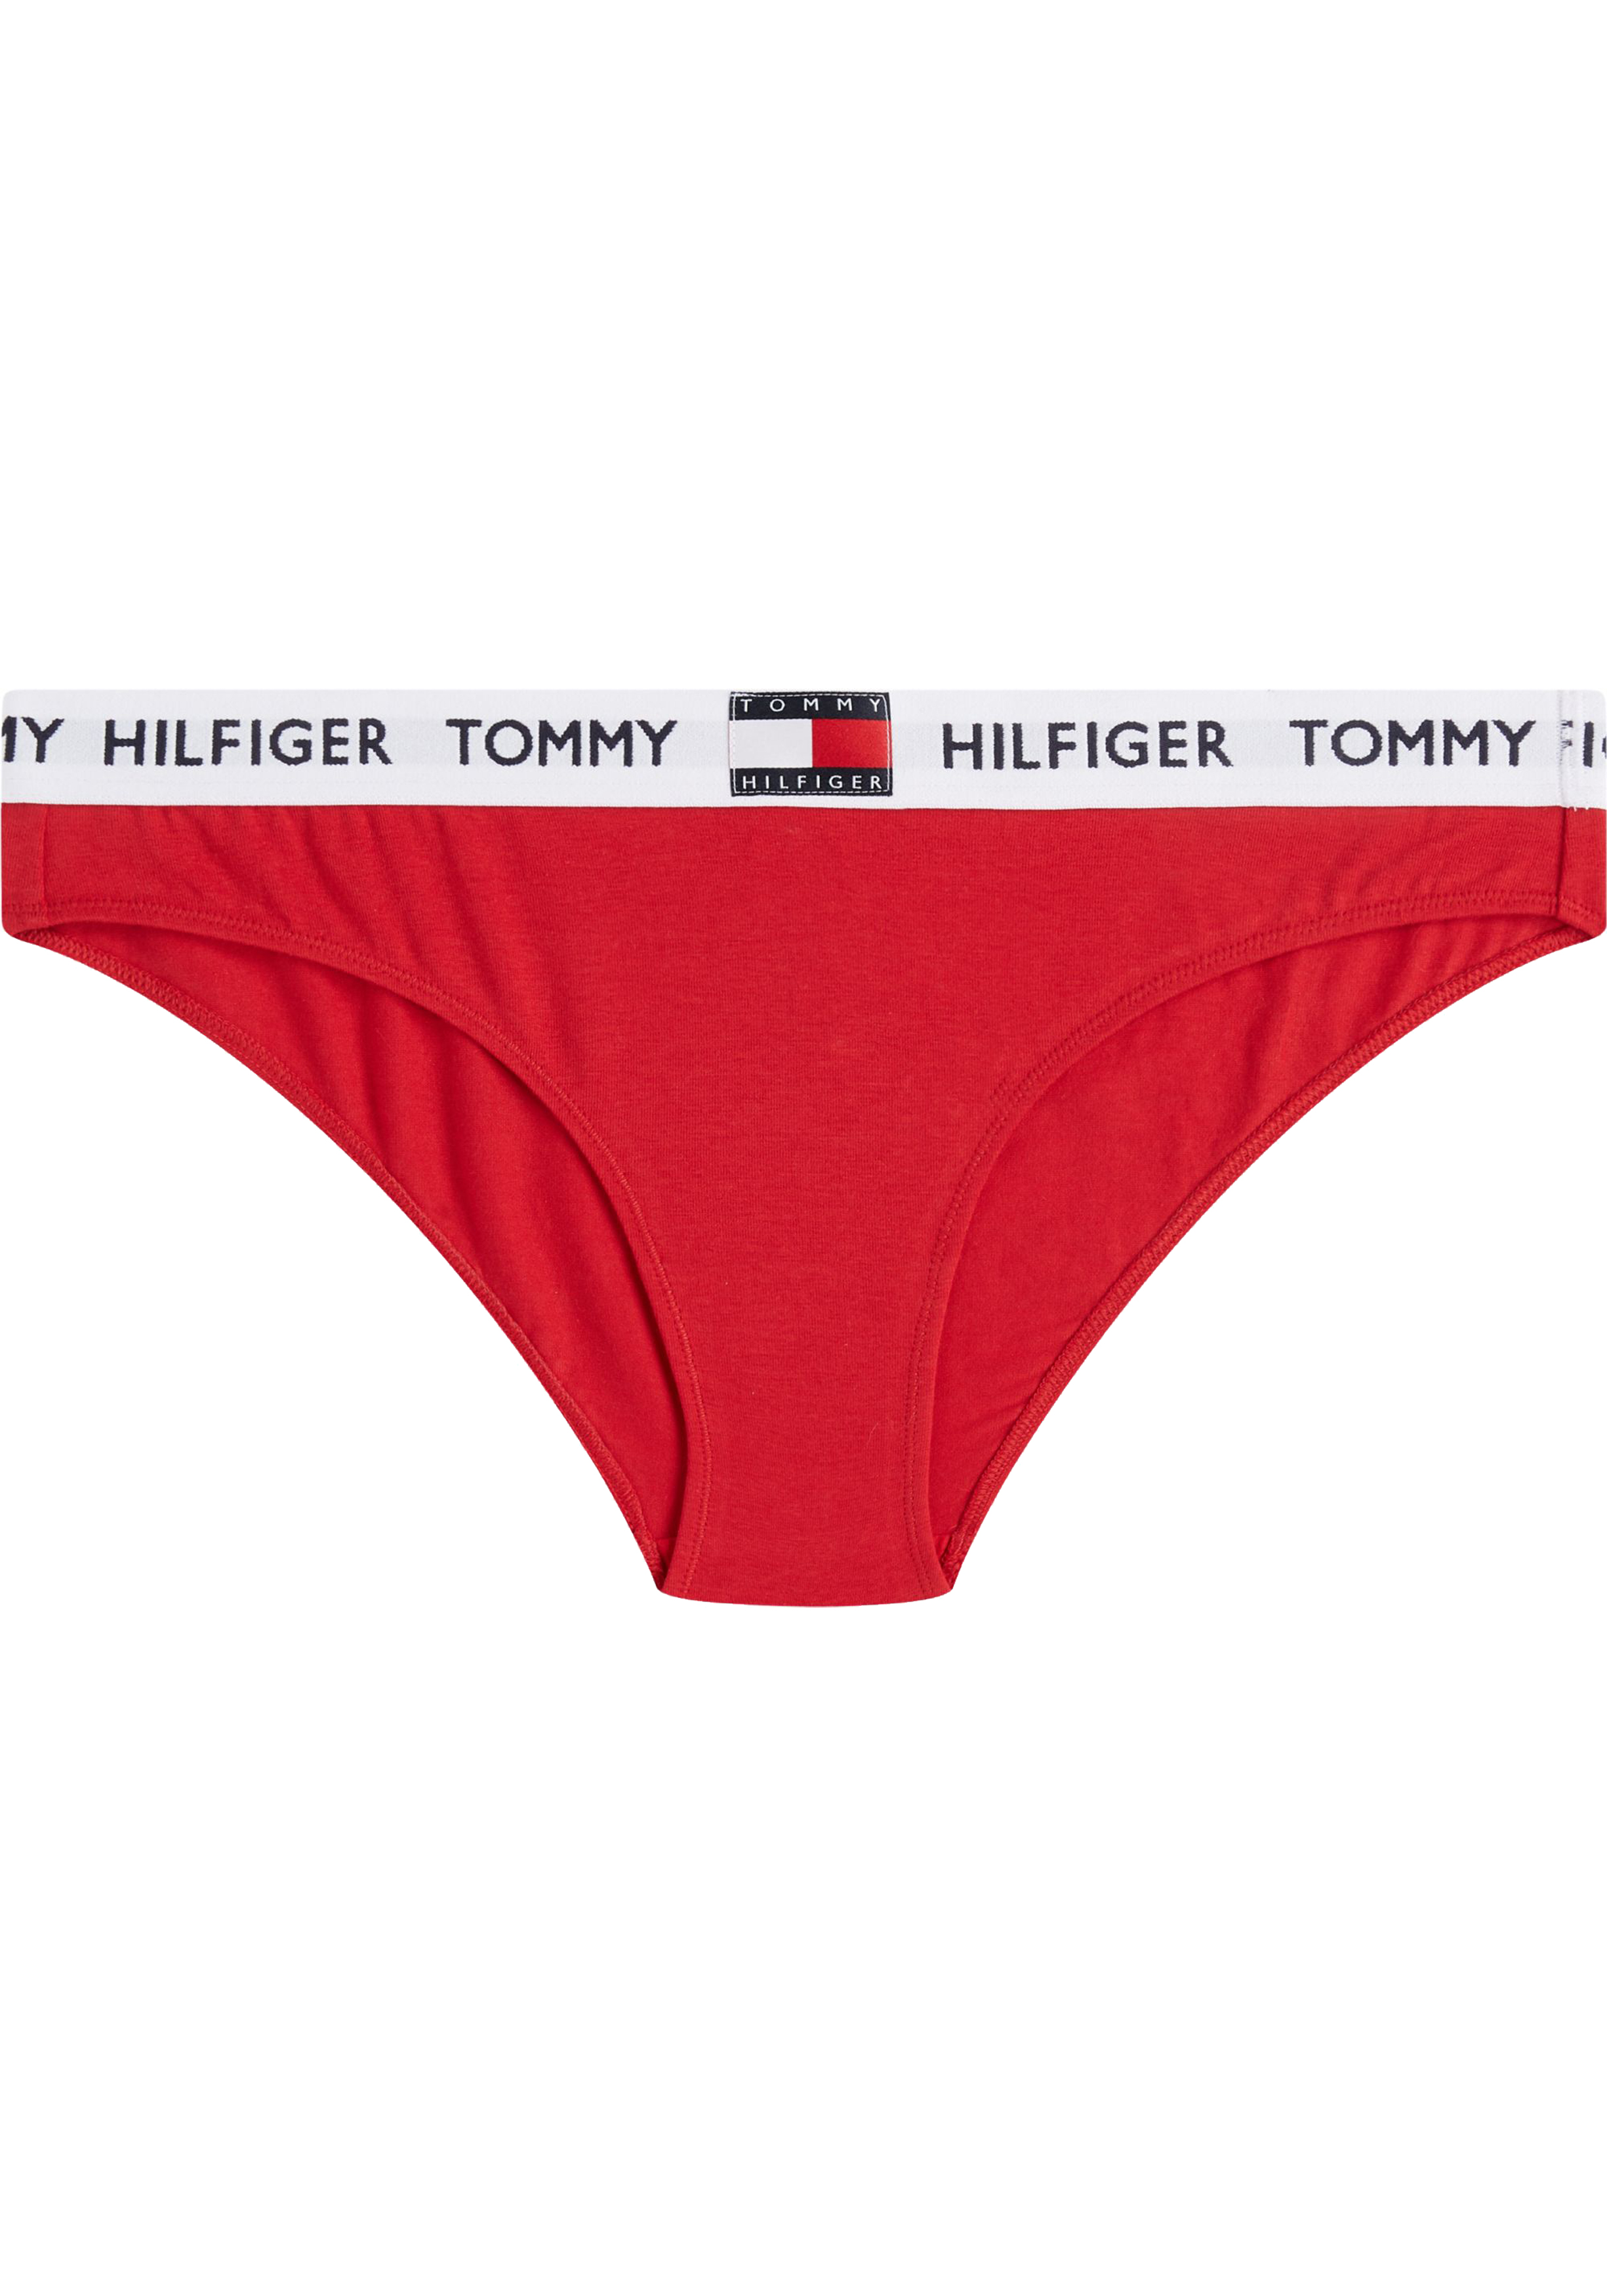 50% met bikini Tommy - kortingen (1-pack), Hilfiger dames 85 slip Tommy tot SALE rood